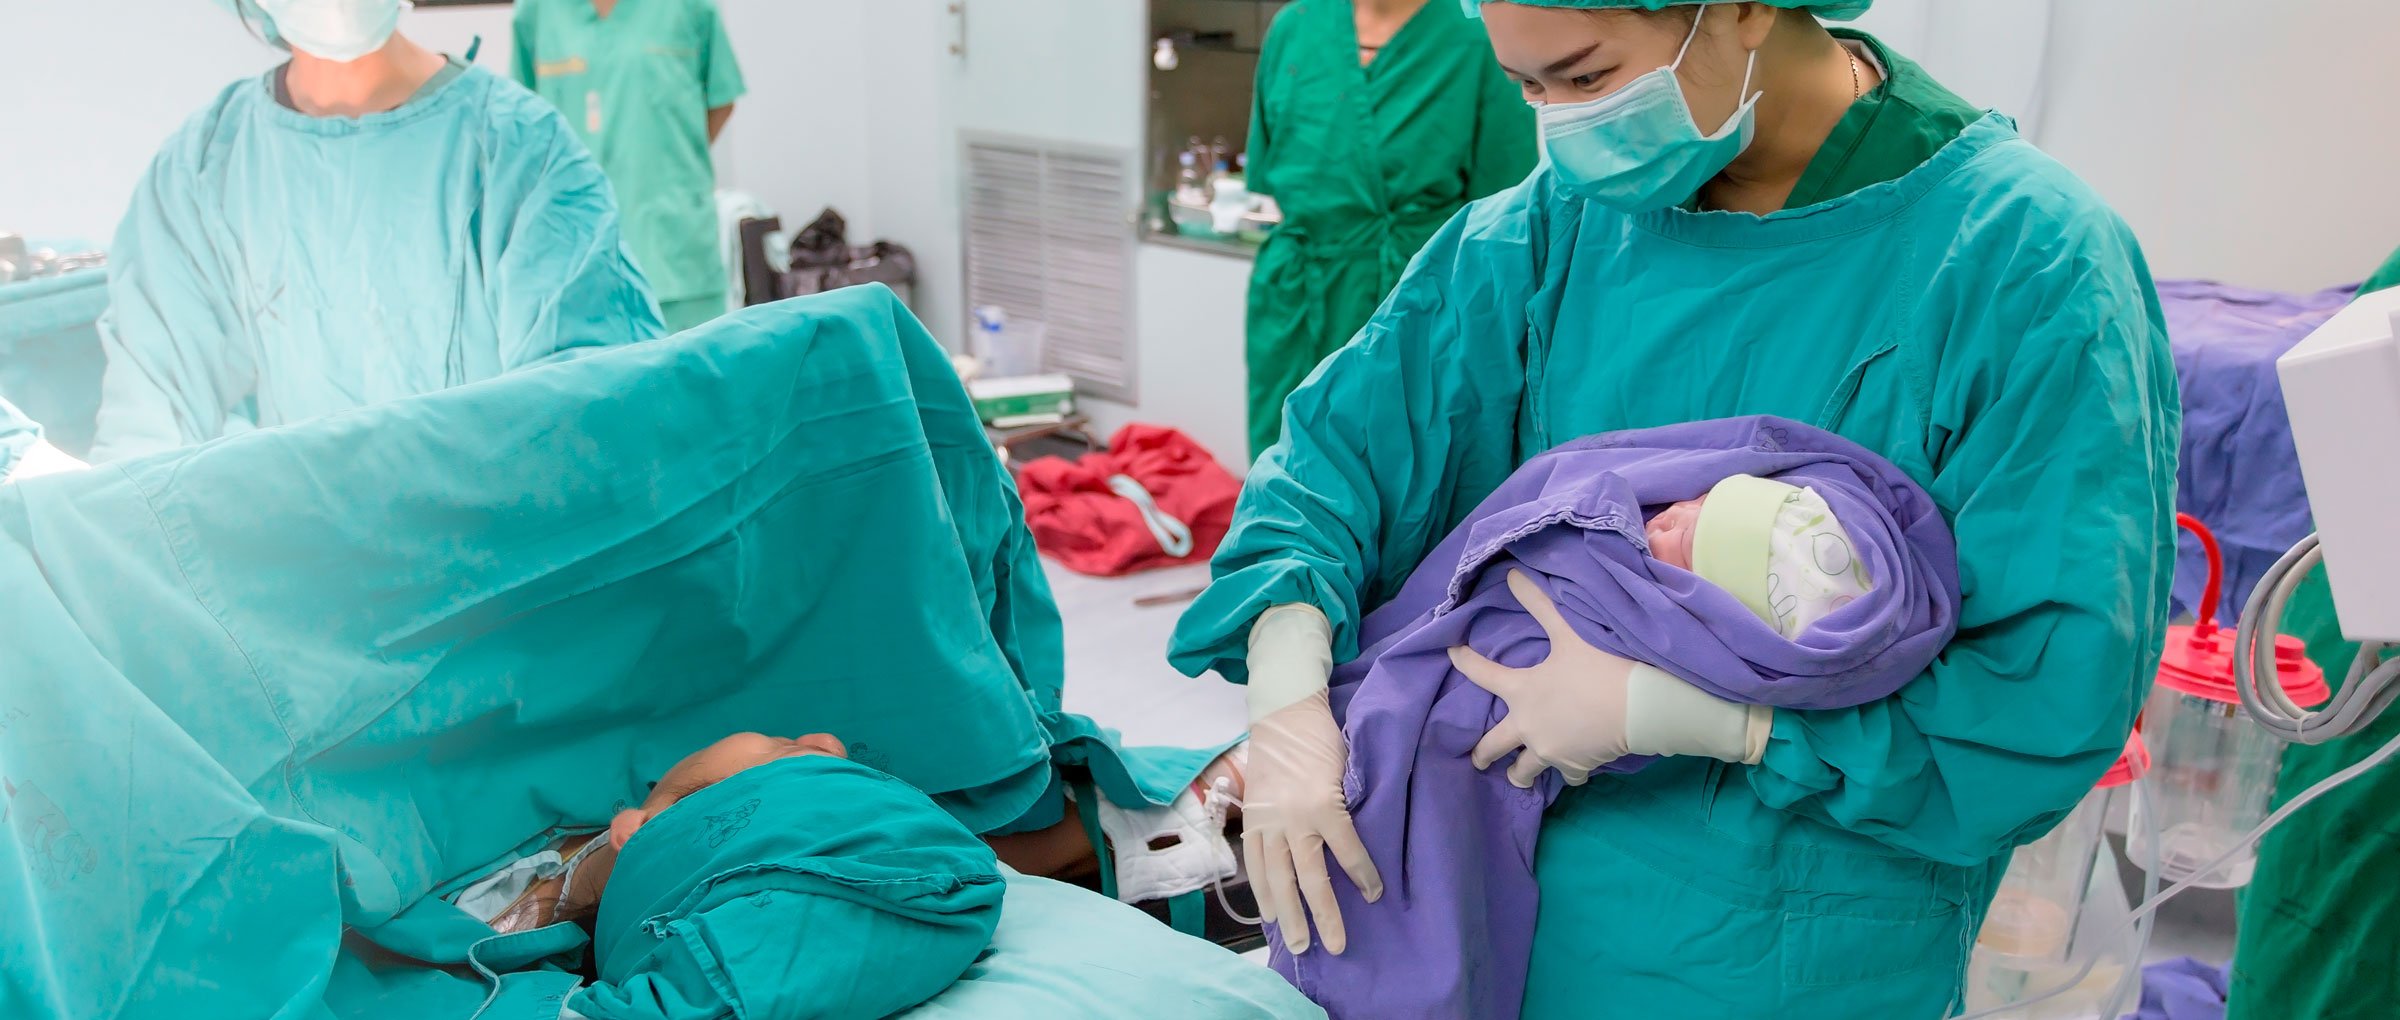 Cesarean section procedure for childbirth